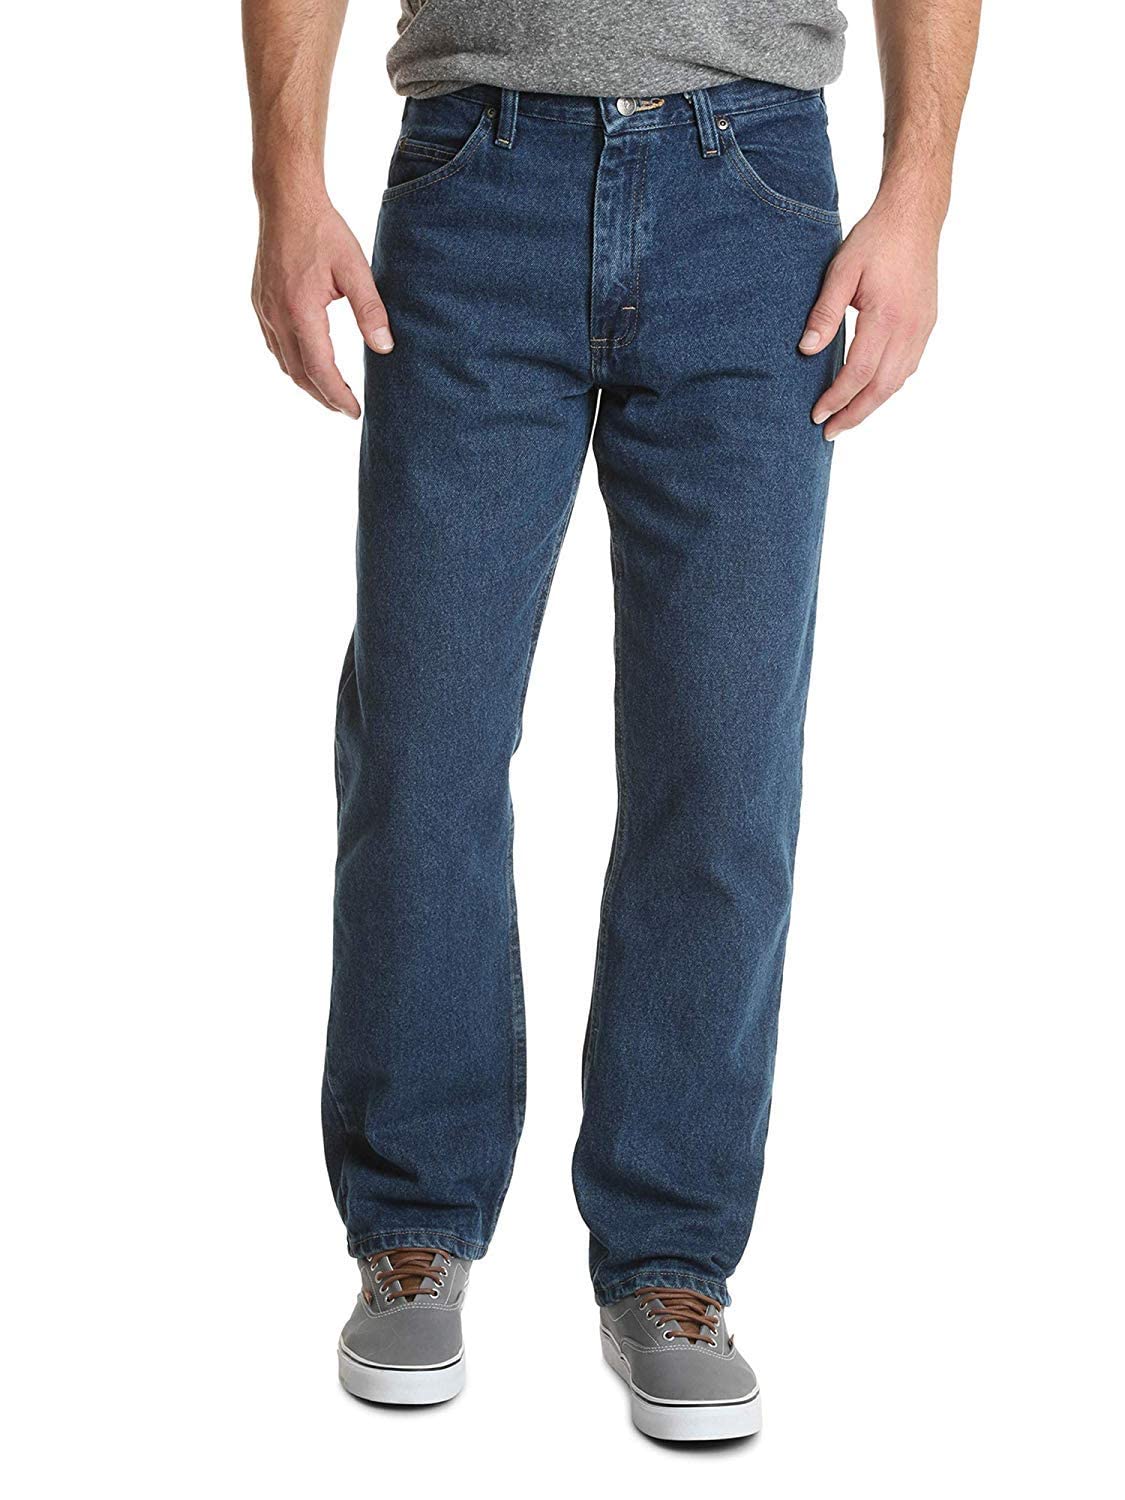 Wrangler Authentics Men's Classic 5-Pocket Relaxed Fit Cotton Jean, Dark Stonewash, 38W x 32L